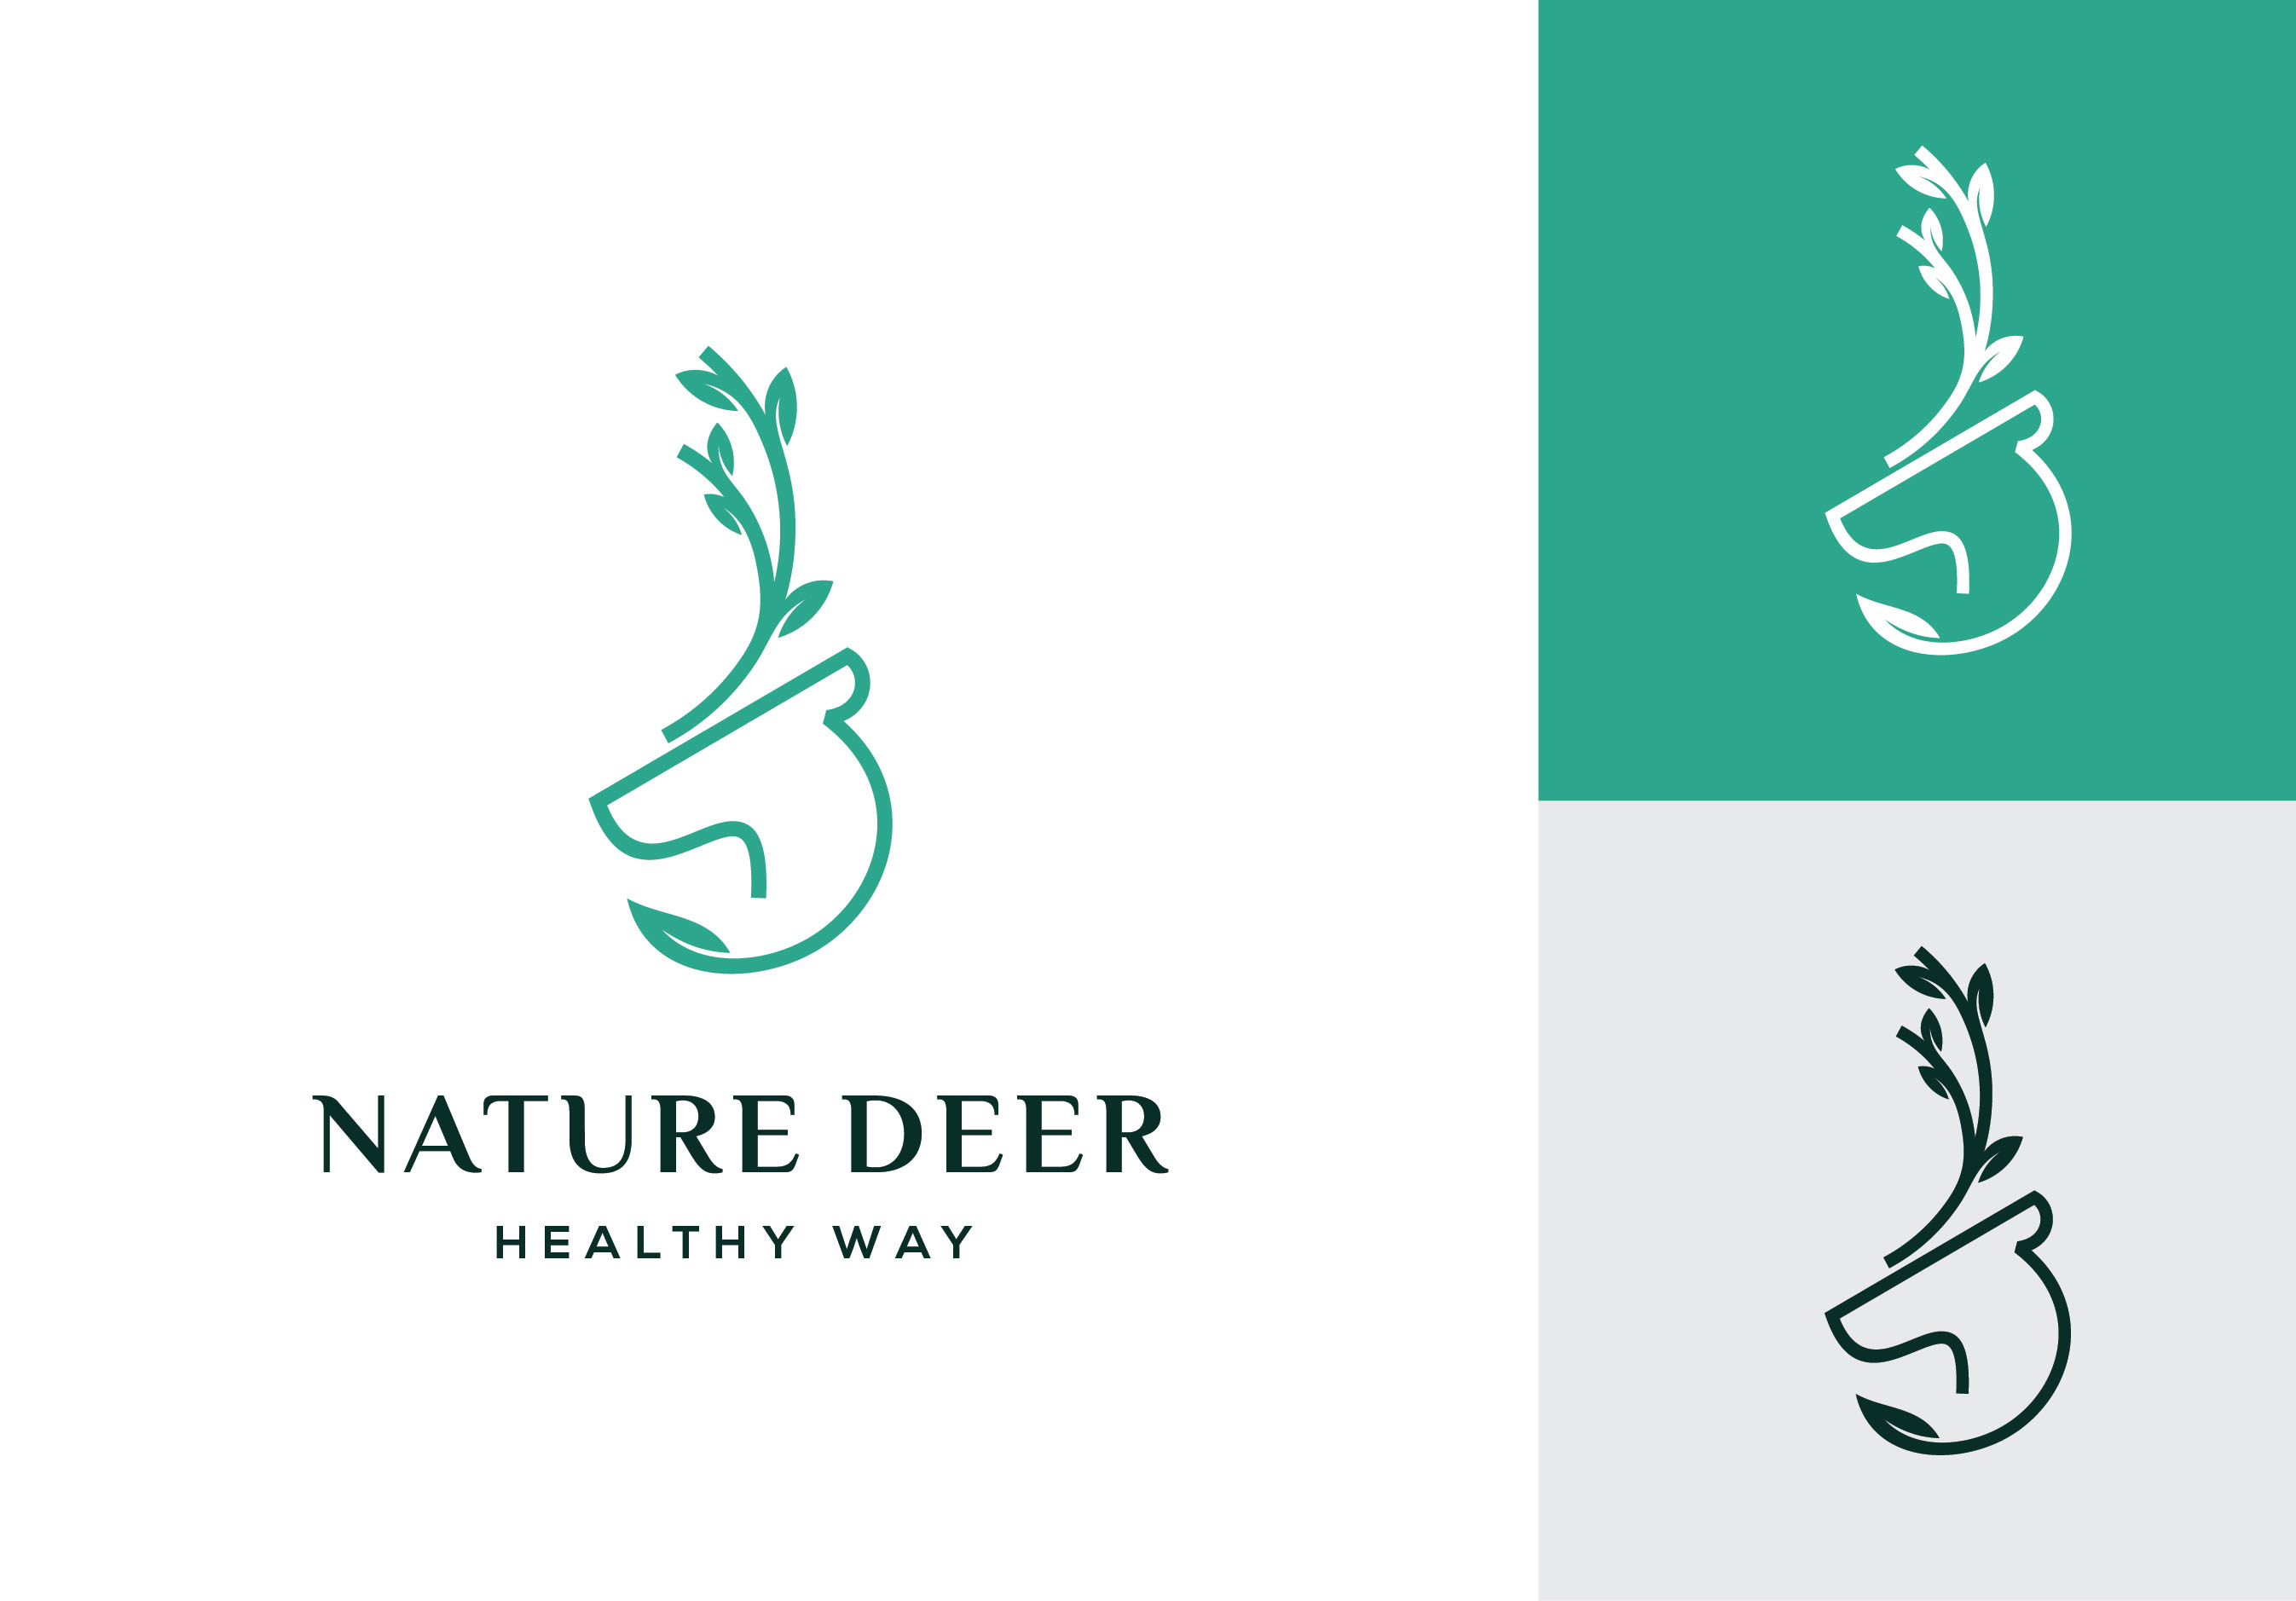 design creative modern and minimalist logo for $10 - SEOClerks